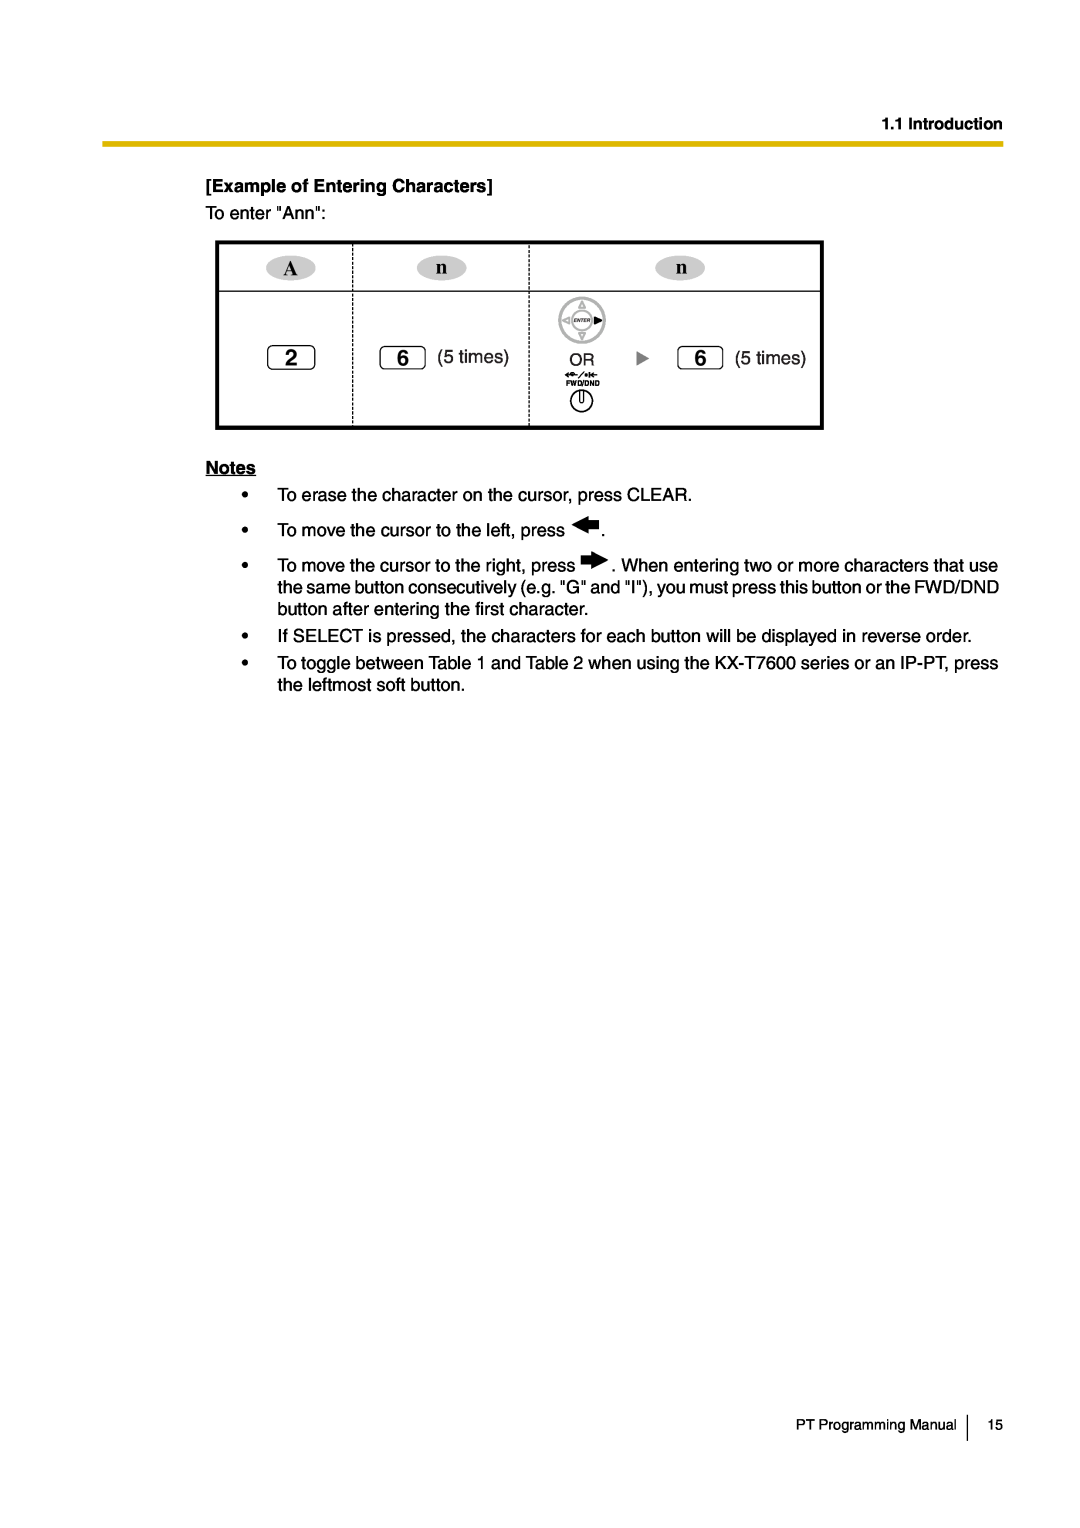 Panasonic KX-TDA30 manual 6 5 times, Example of Entering Characters, Notes 